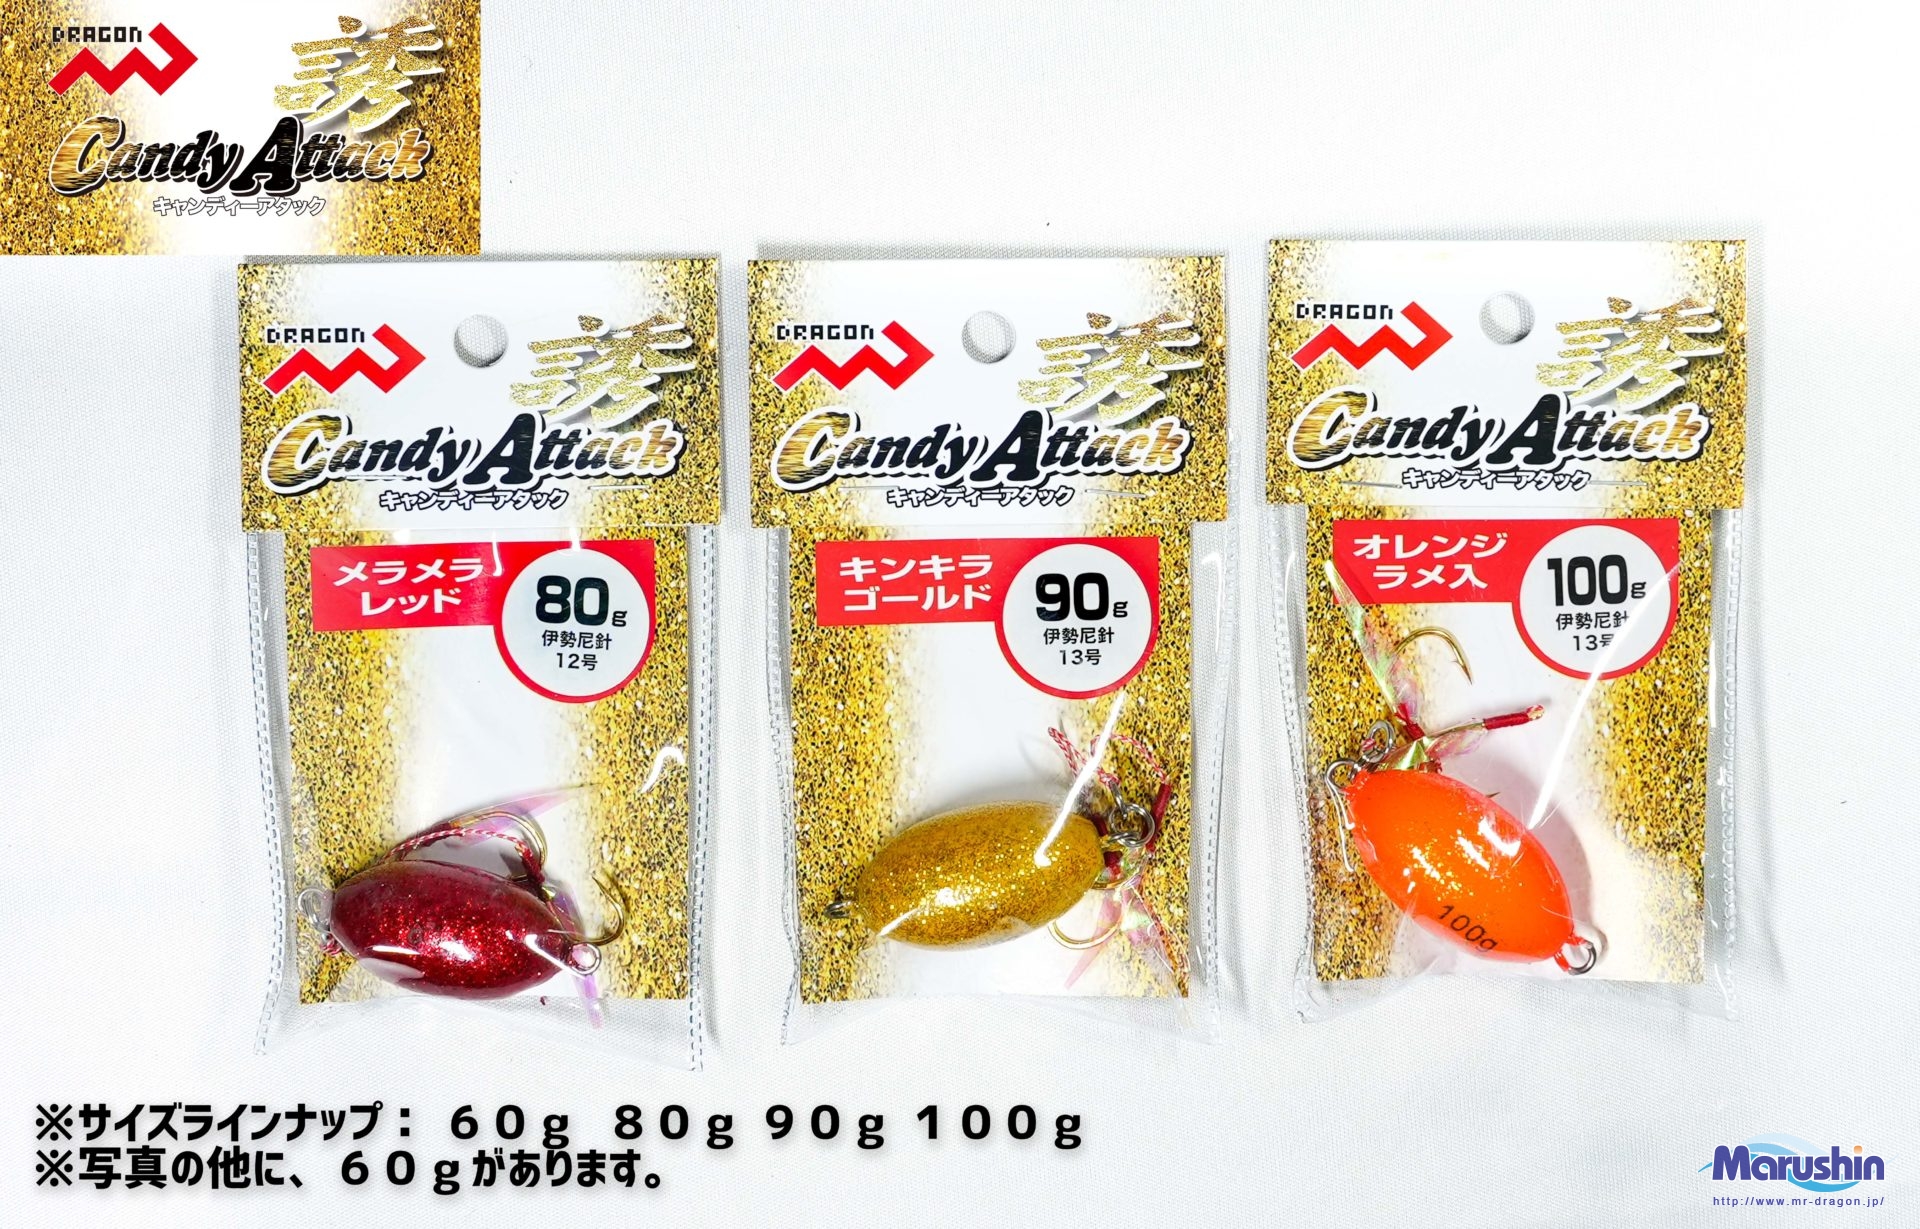 Candy Attack (キャンディーアタック)60g、80g、90g、100gイメージ画像